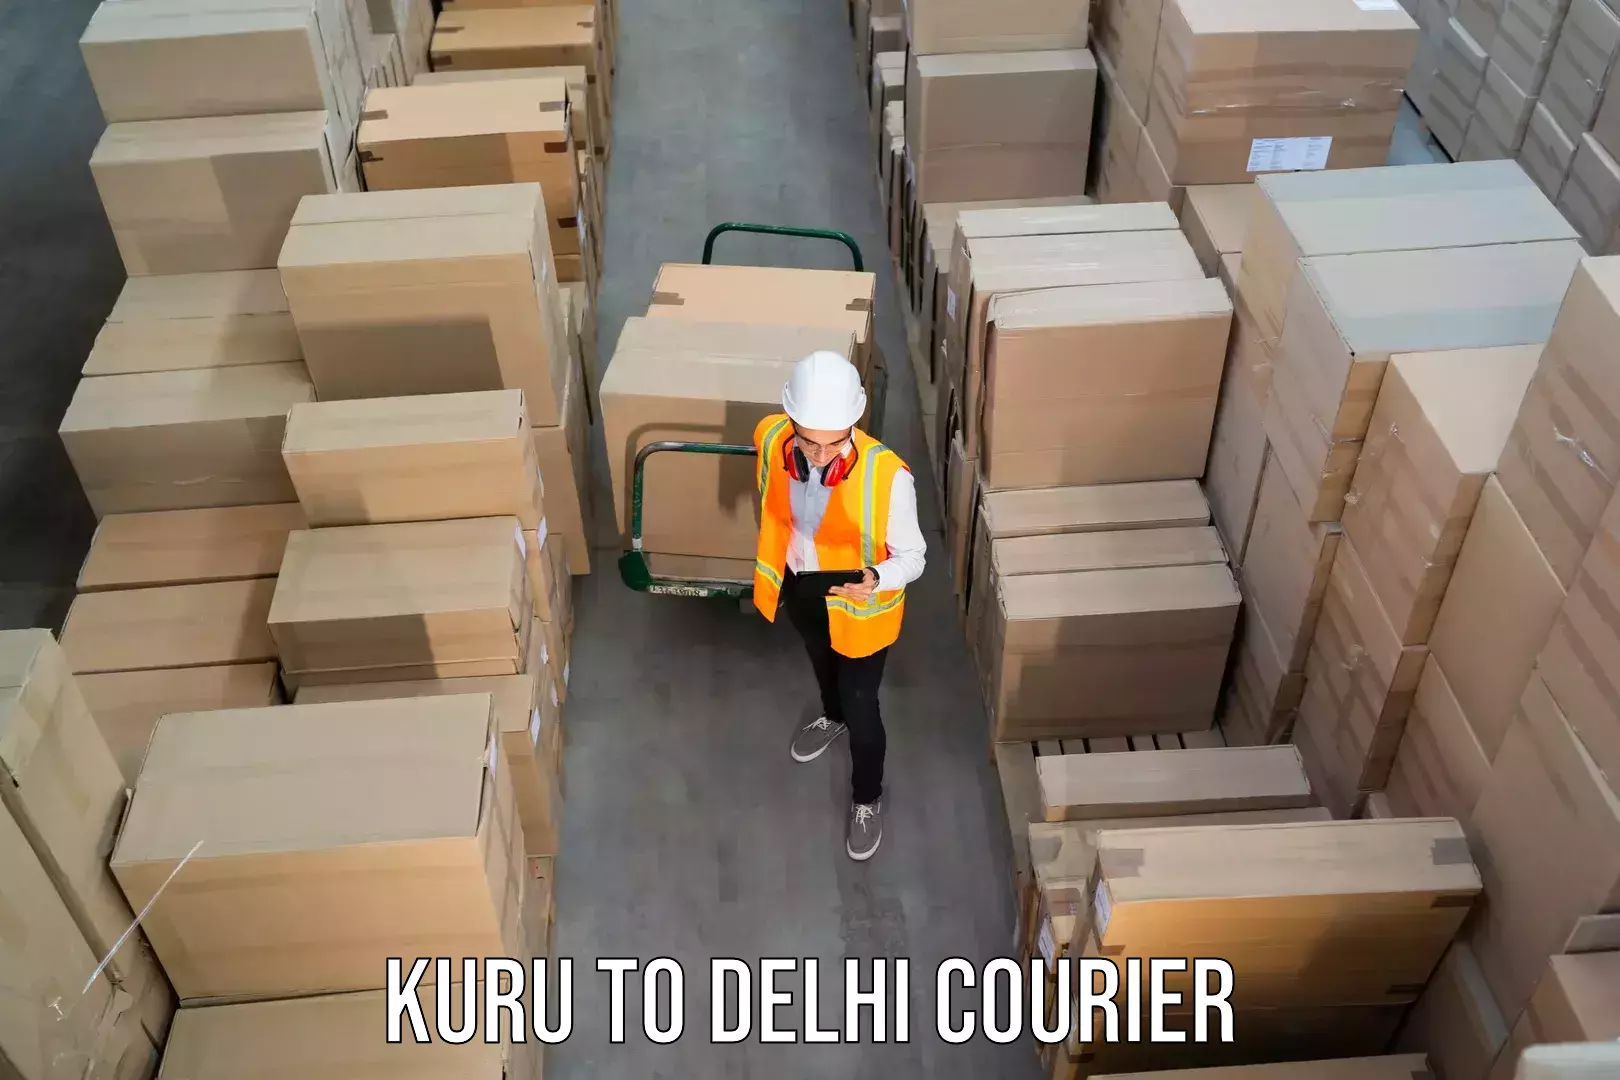 Round-the-clock parcel delivery Kuru to Delhi